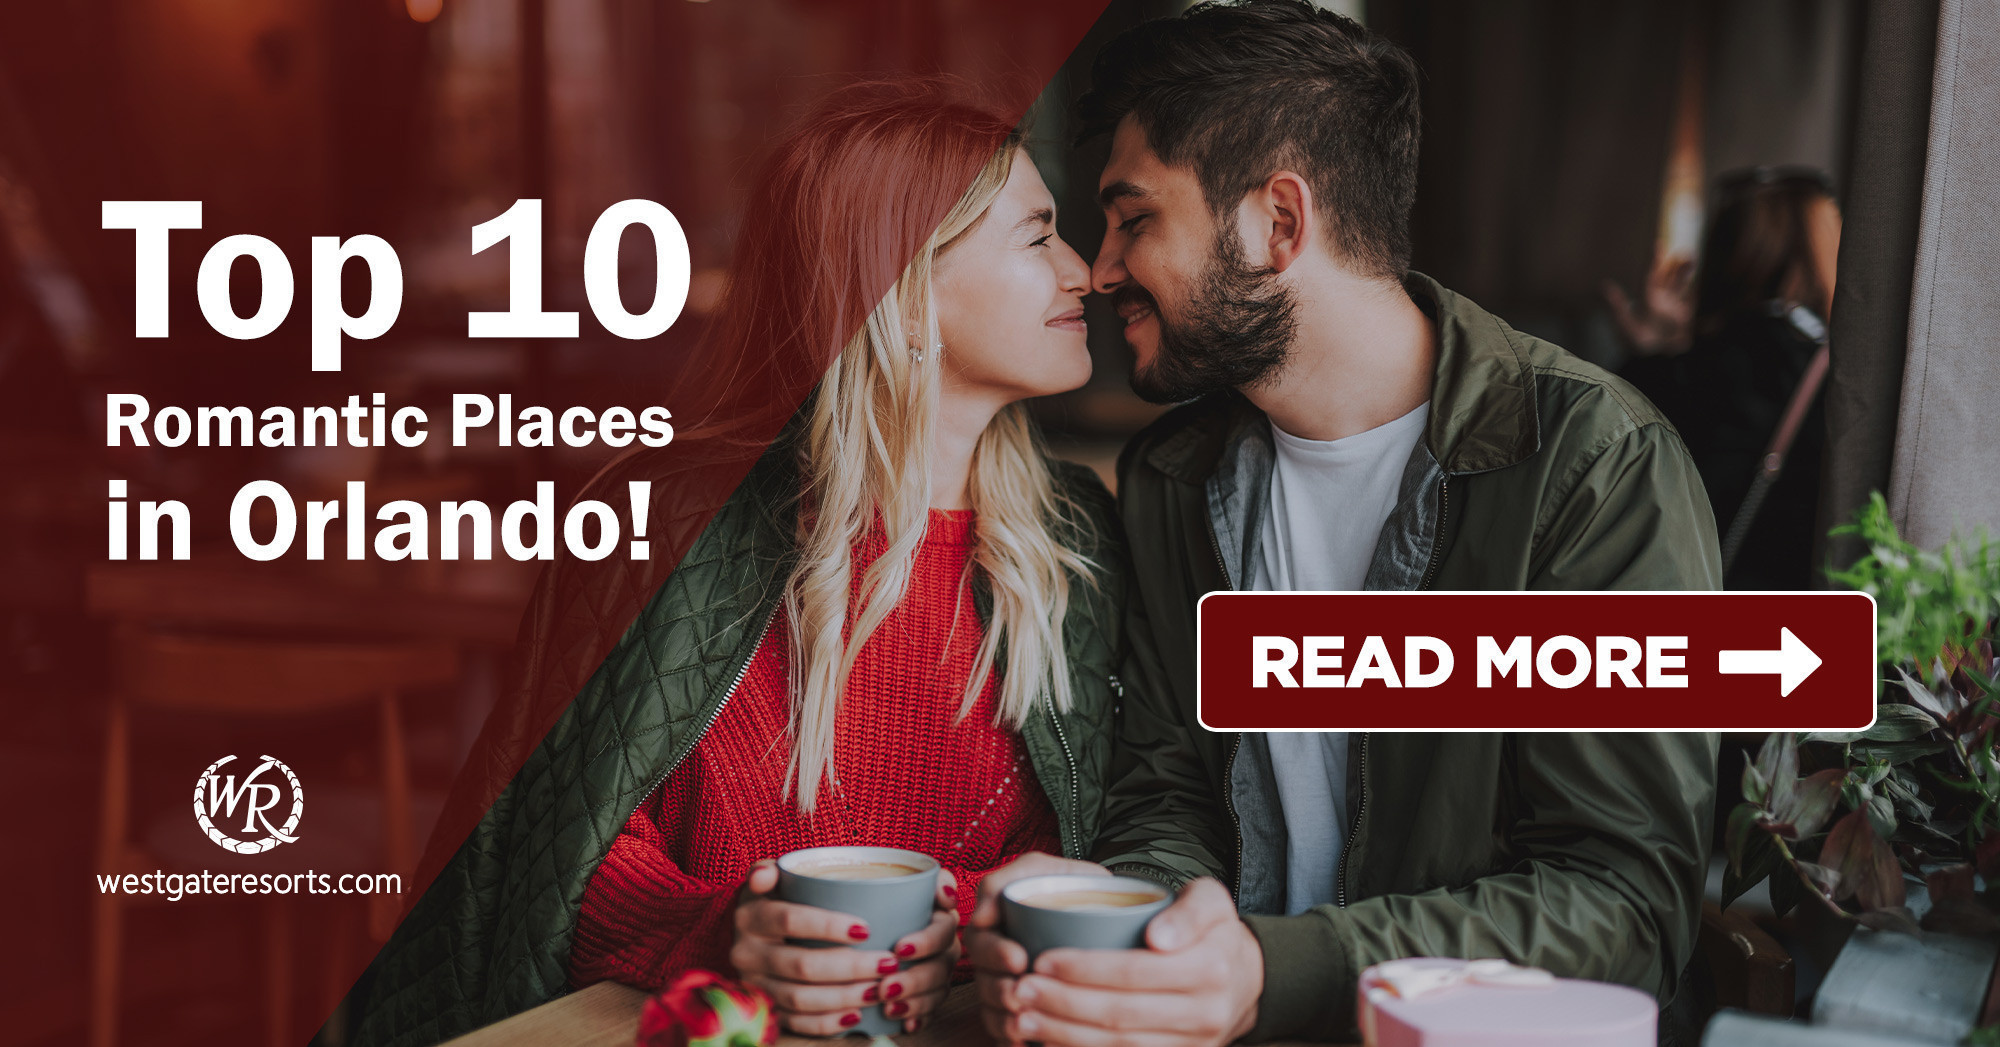 Top 10 Romantic Places in Orlando!